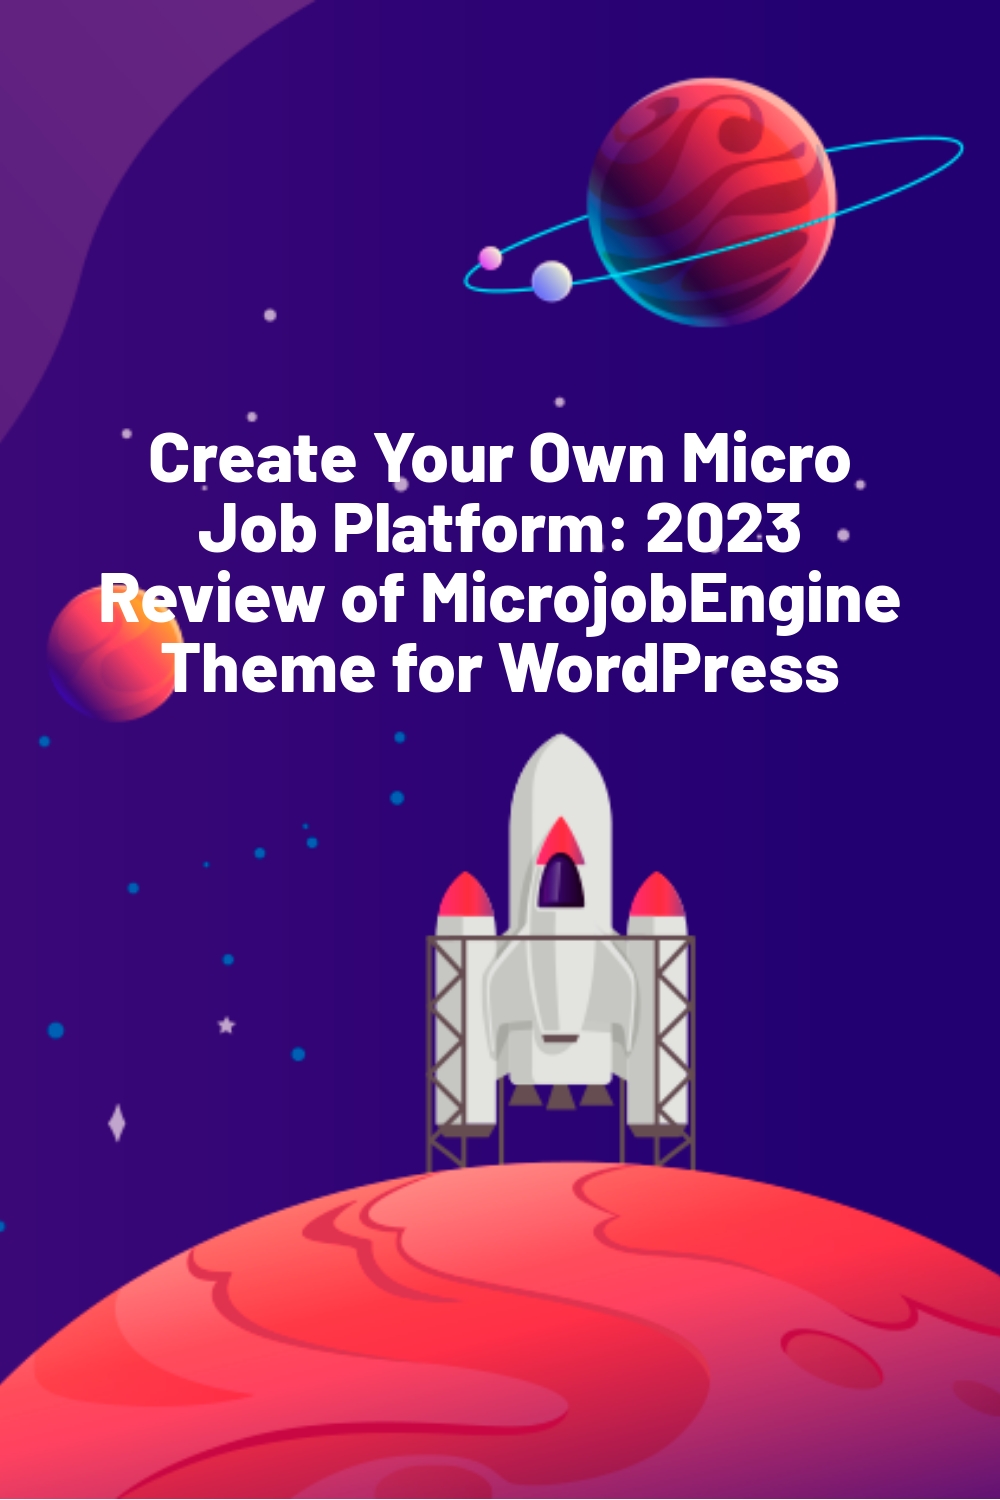 Create Your Own Micro Job Platform: 2023 Review of MicrojobEngine Theme for WordPress